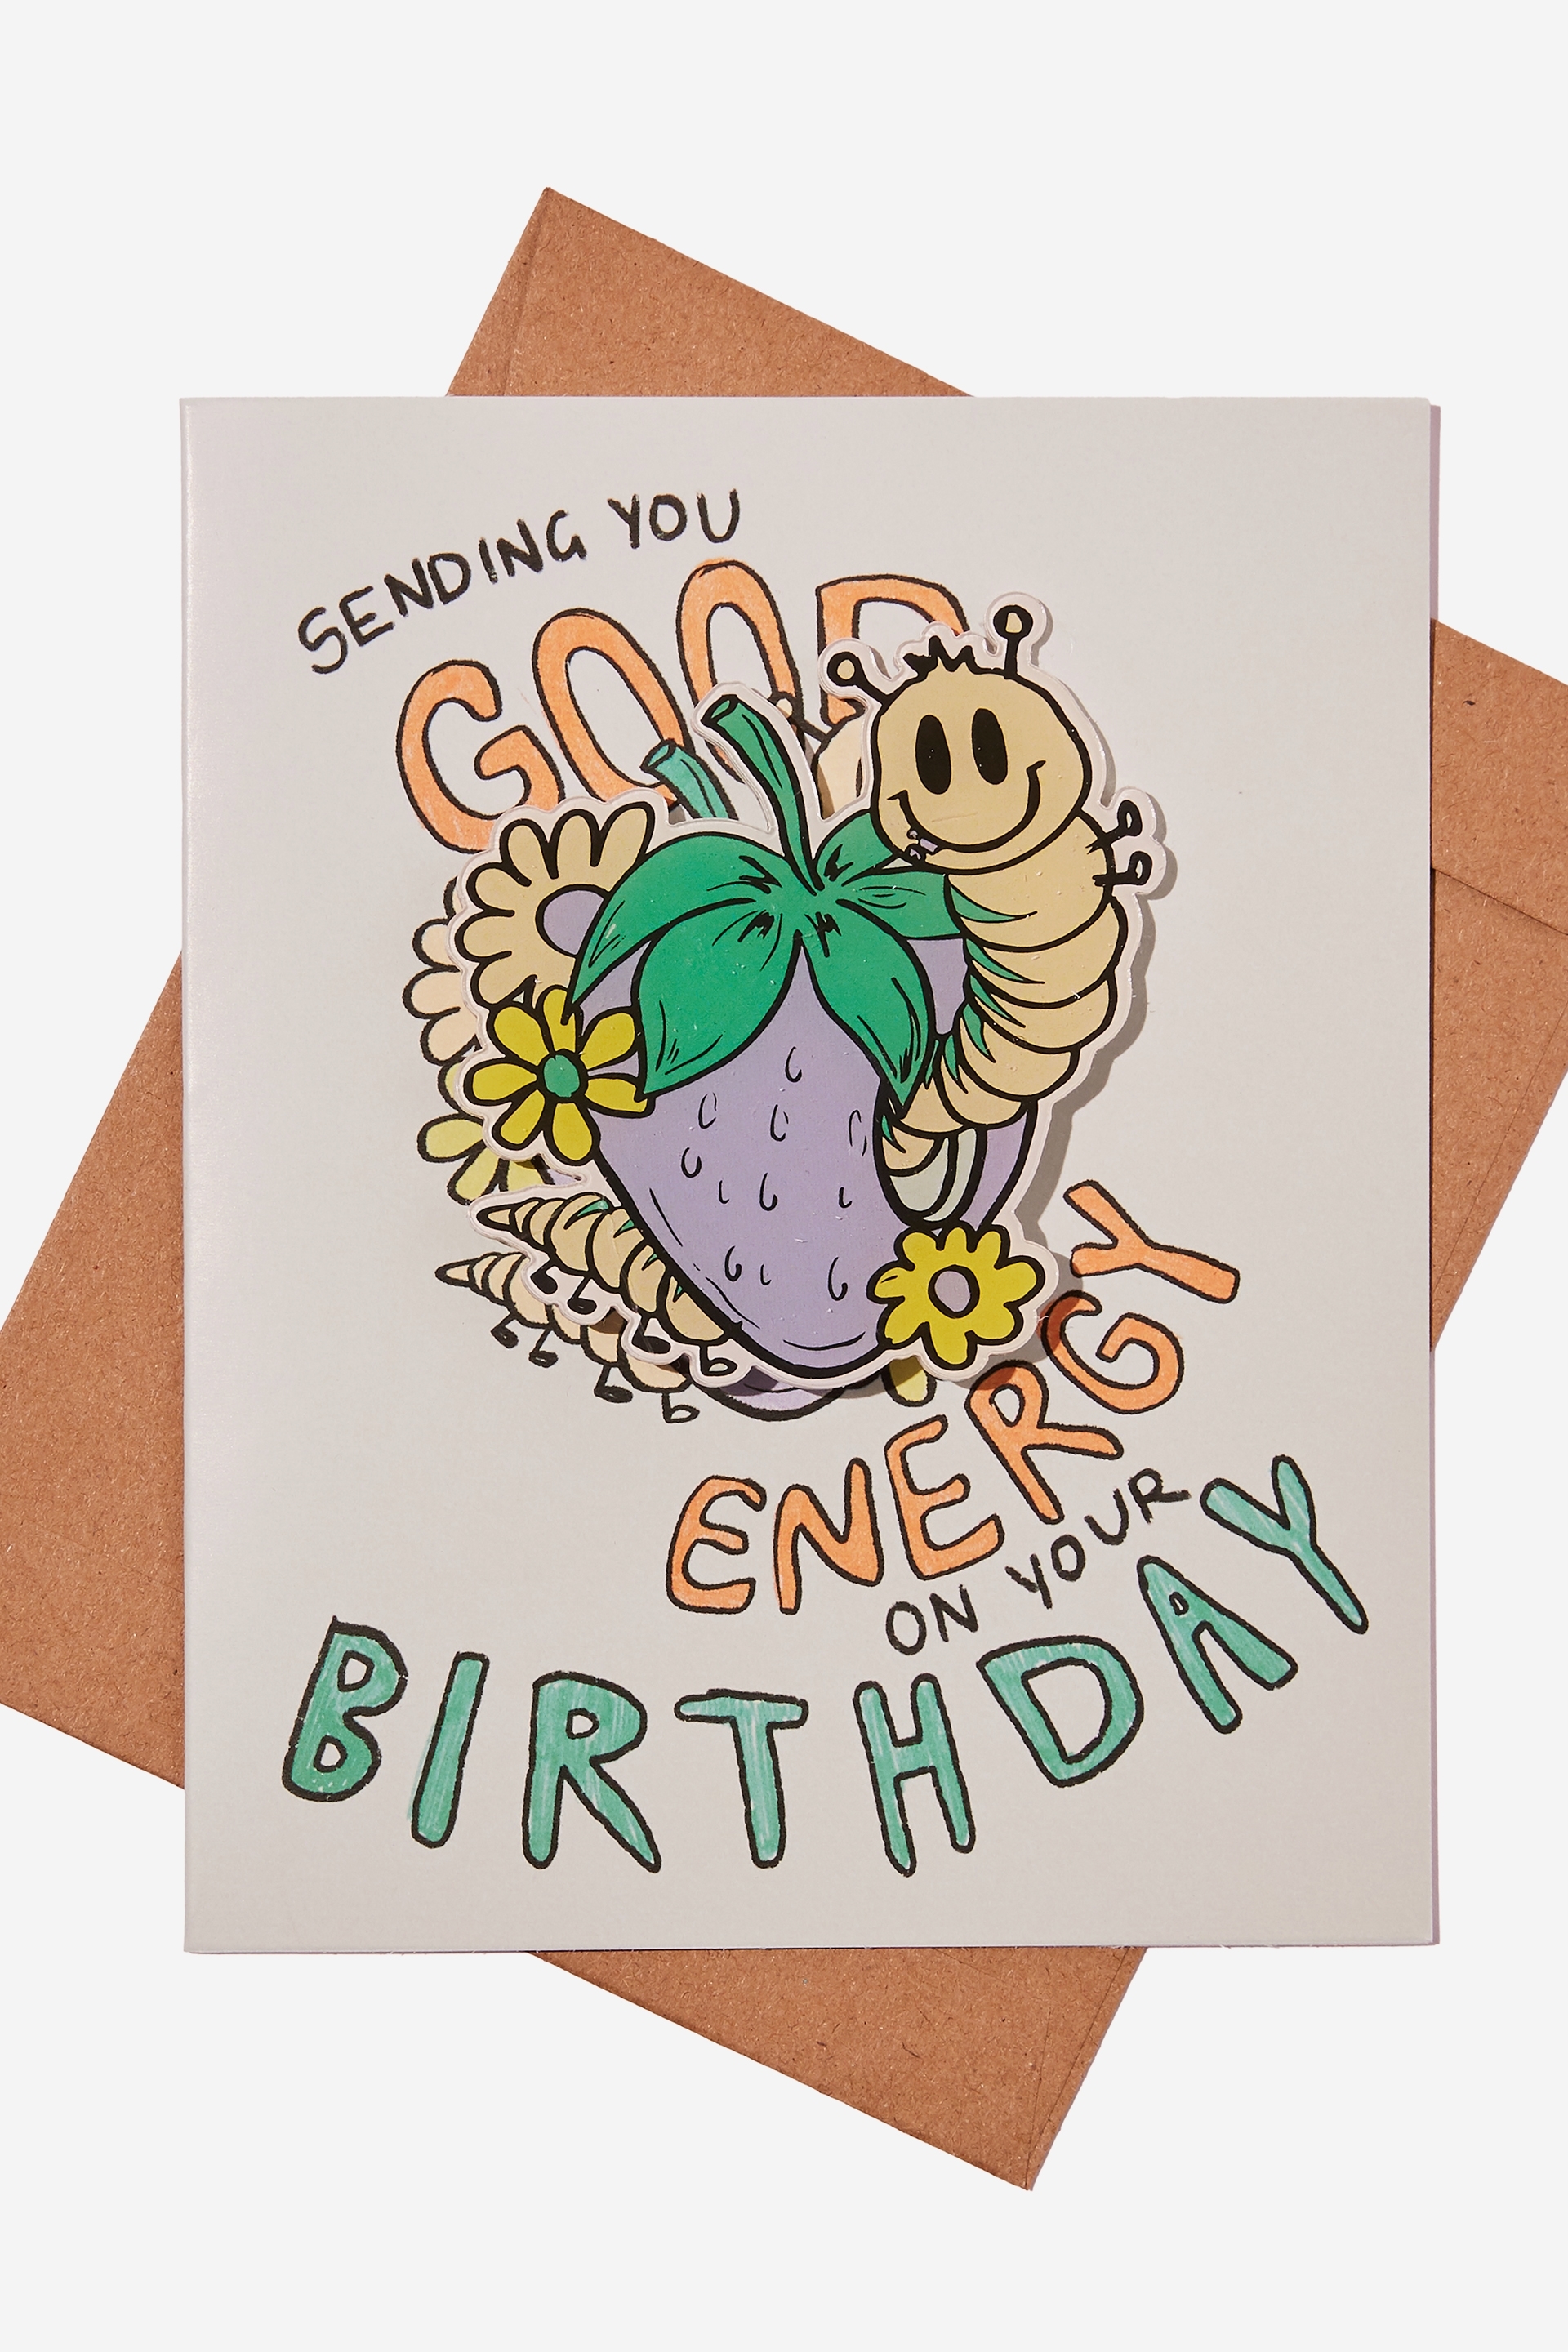 Typo - Premium Badge Card - Caterpillar good energy on your birthday